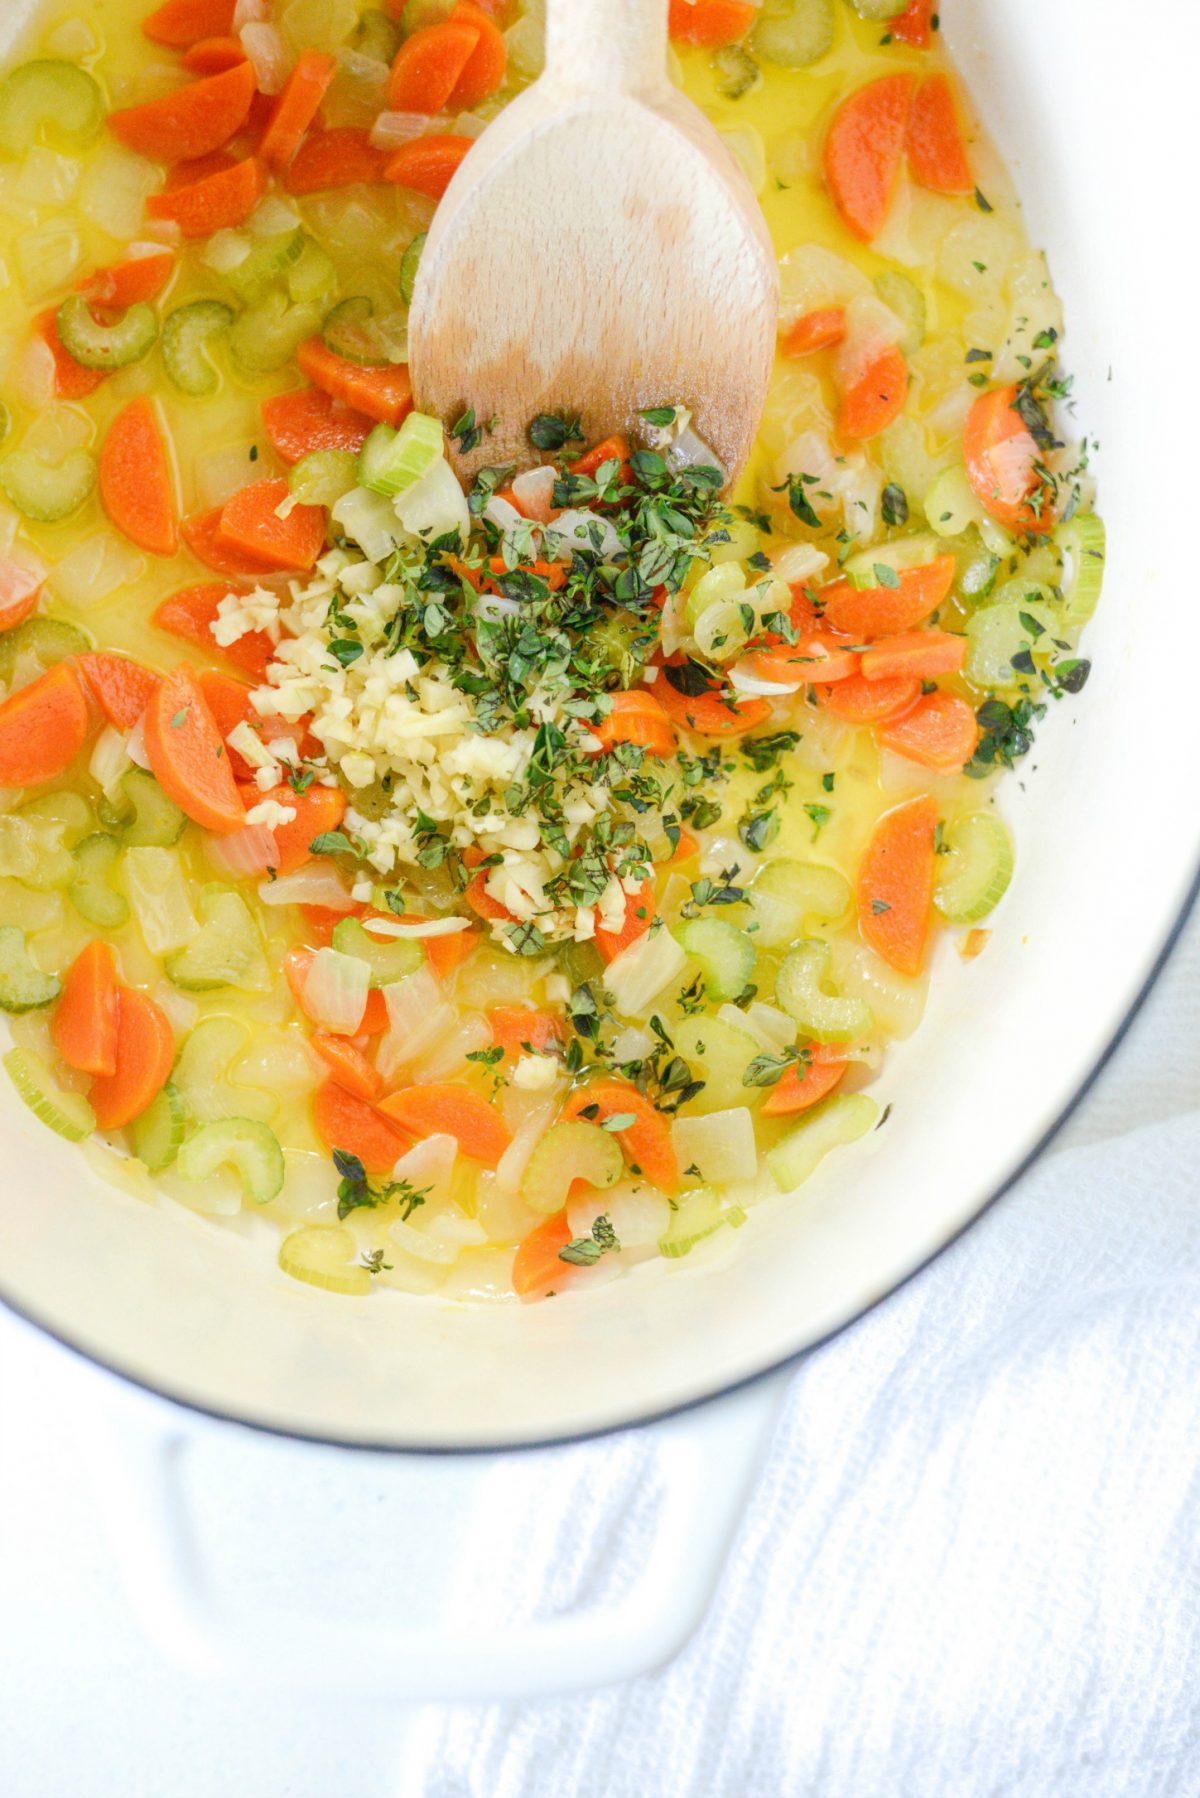 Add garlic and thyme to sautéed veggies